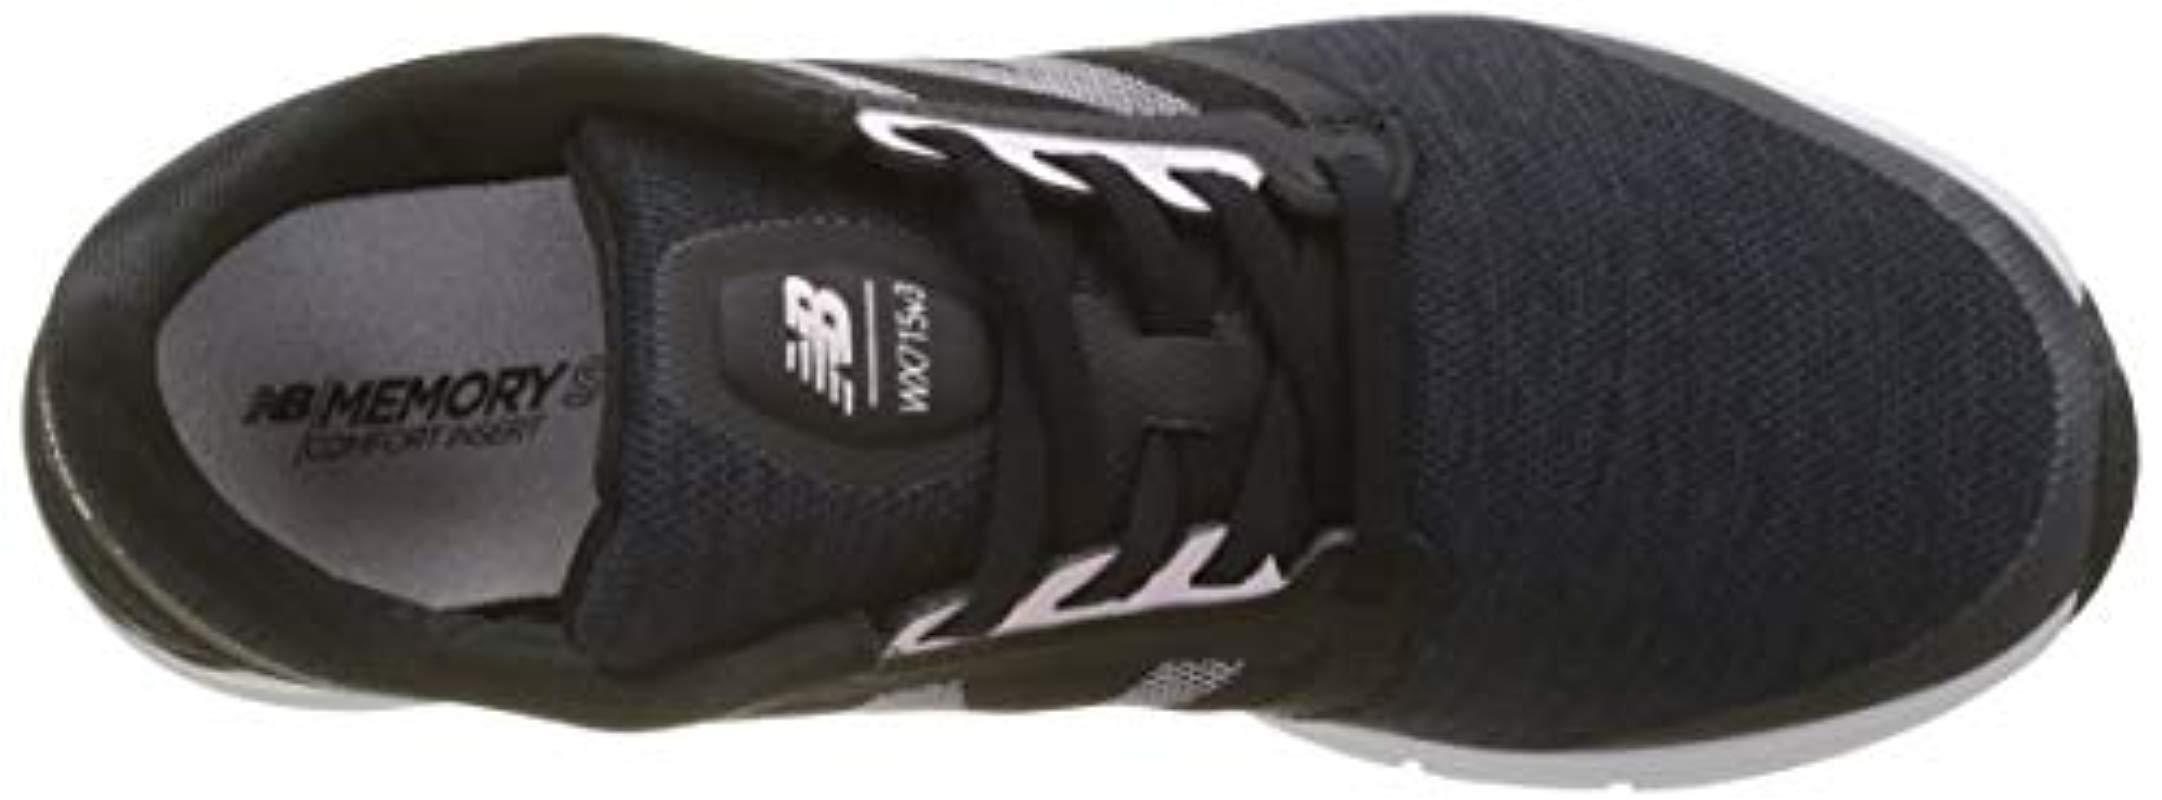 New Balance Wx715v3 Fitness Shoes in Black (Black/Gold) (Black) - Lyst